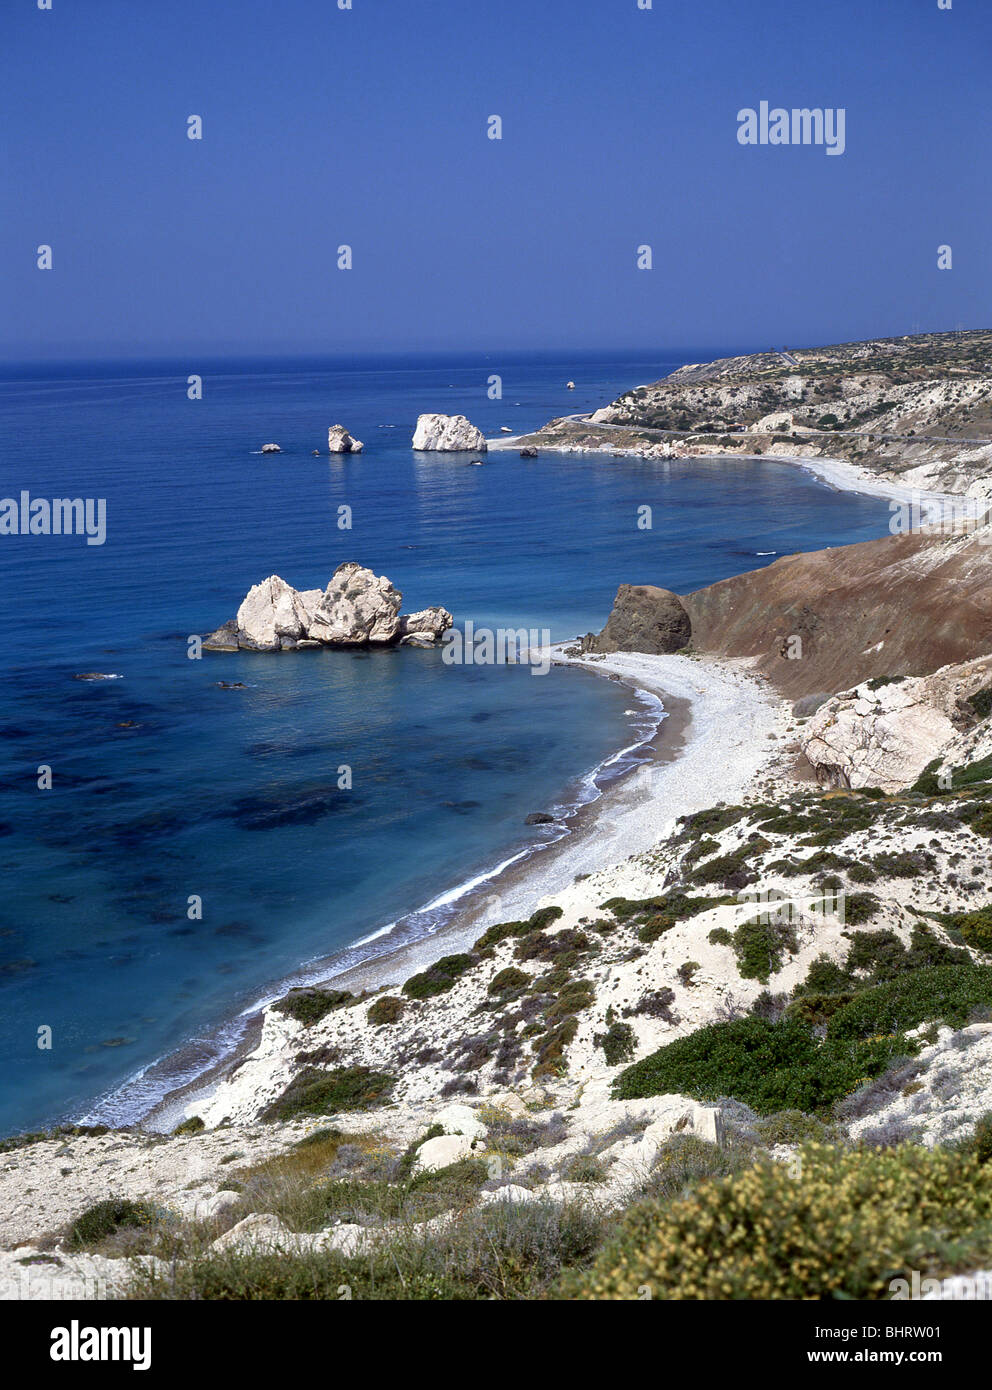 Aphrodite's beach and coastline, Paphos, Republic of Cyprus Stock Photo